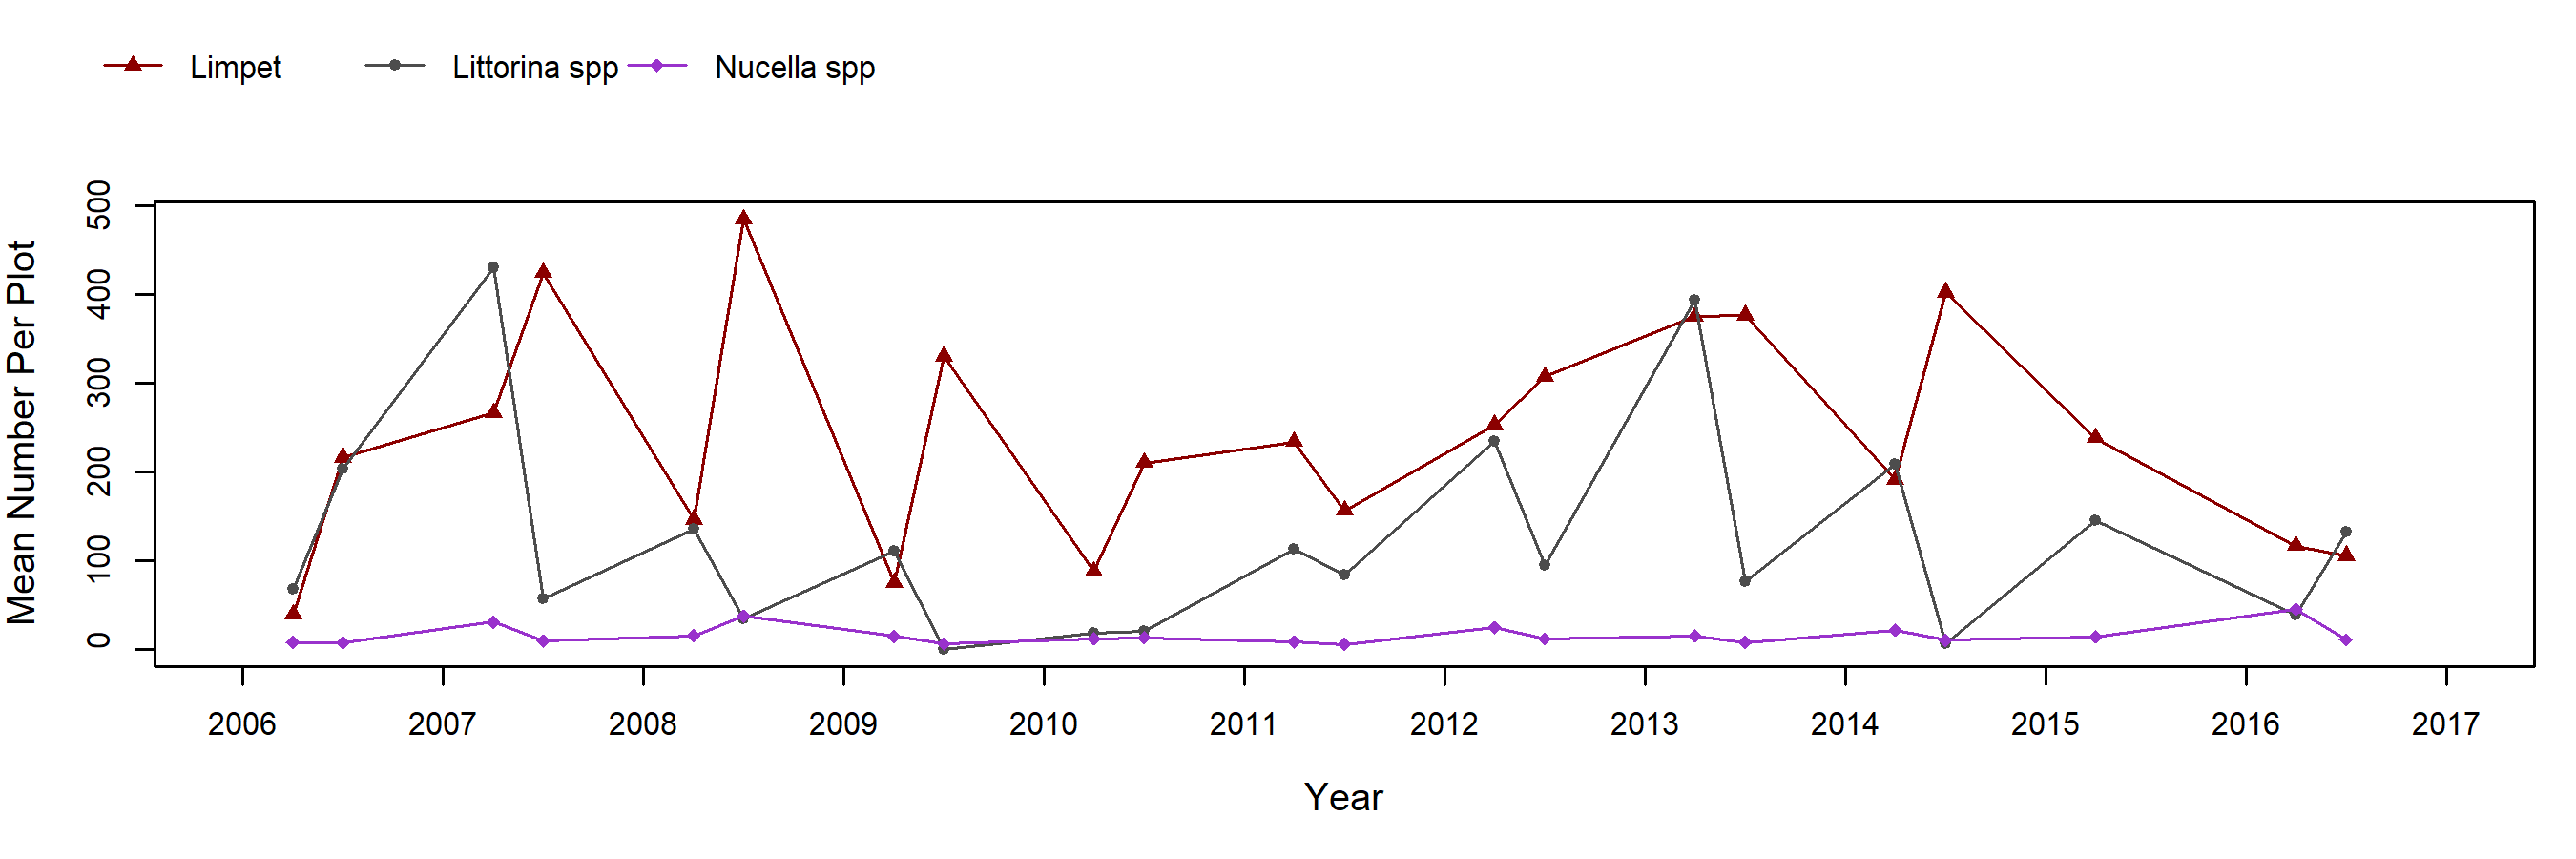 Damnation Creek Mytilus trend plot